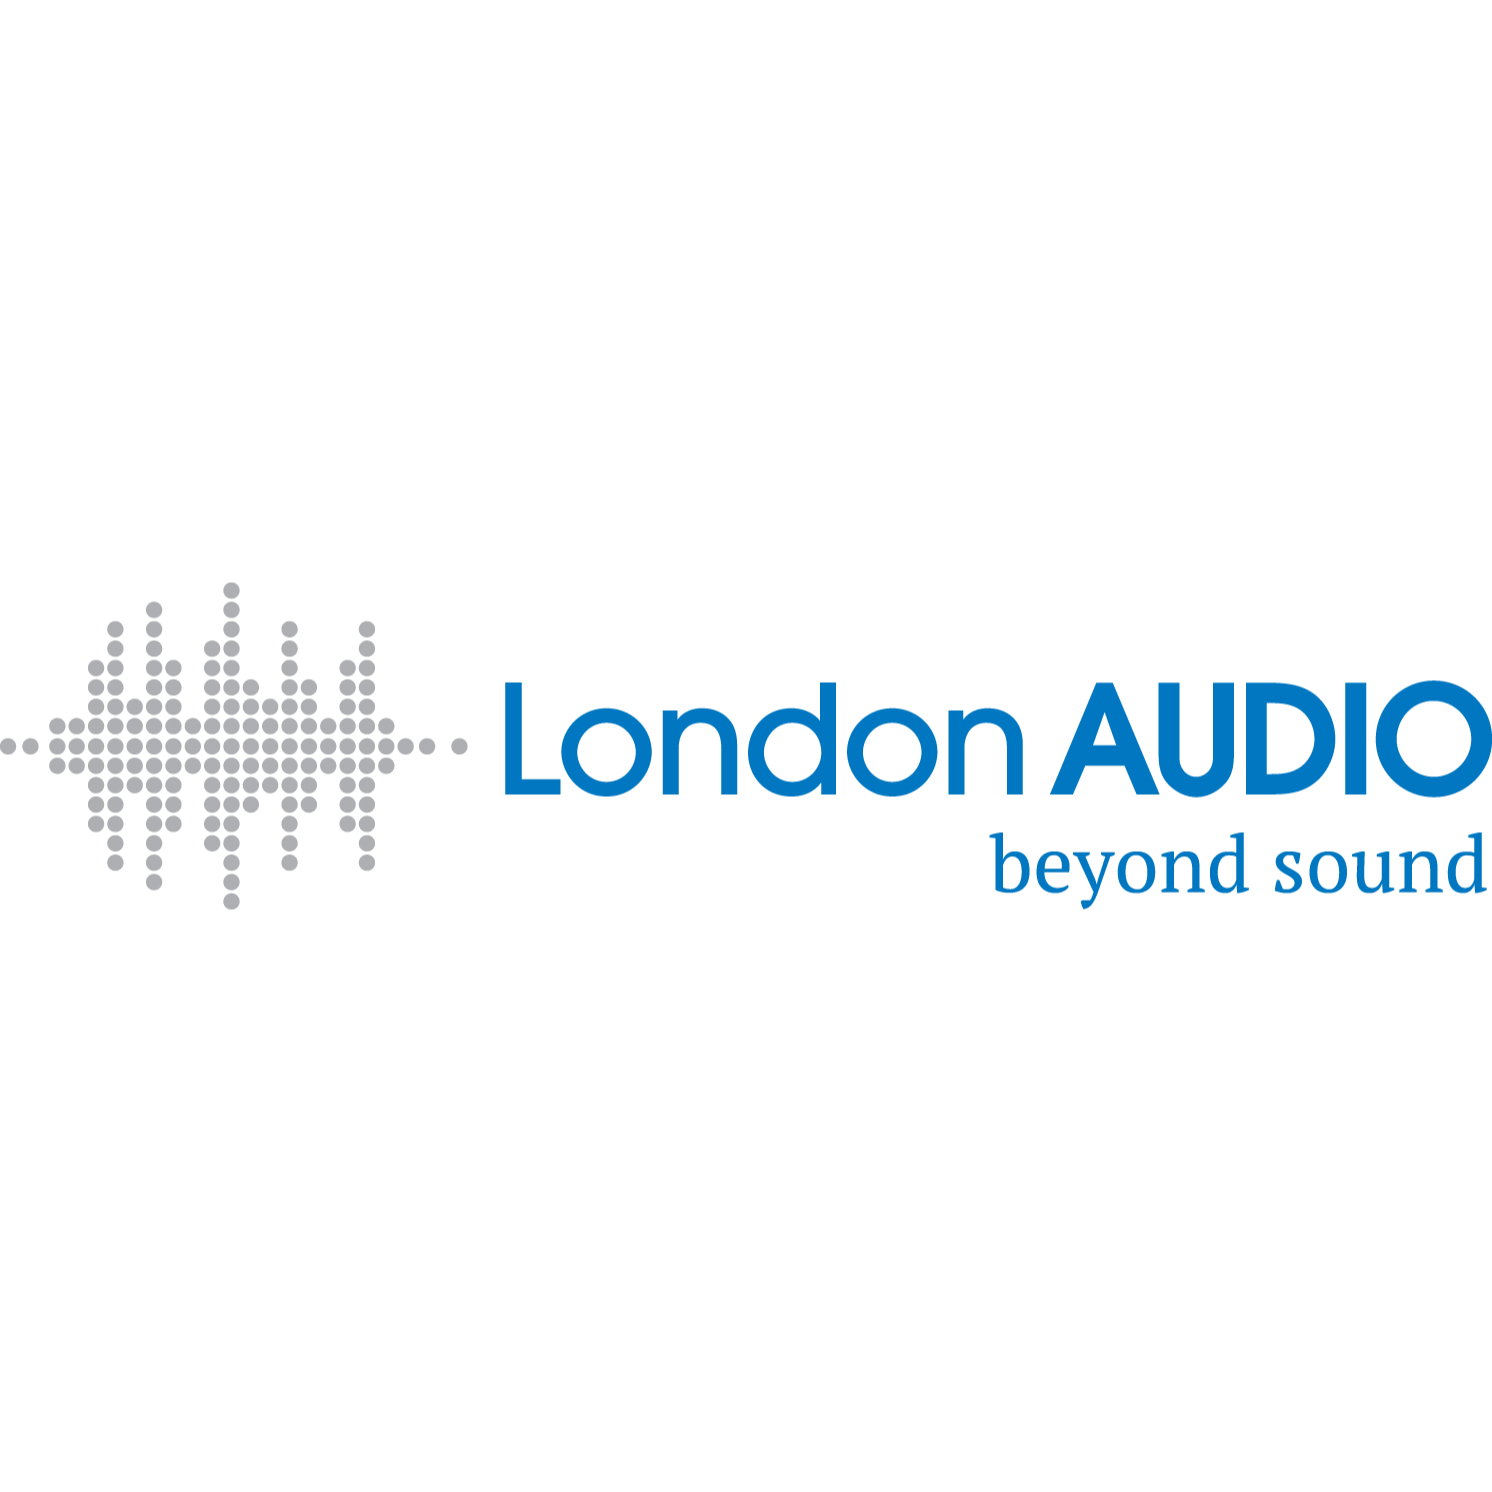 London Audio - Fournitures et matériel audiovisuel